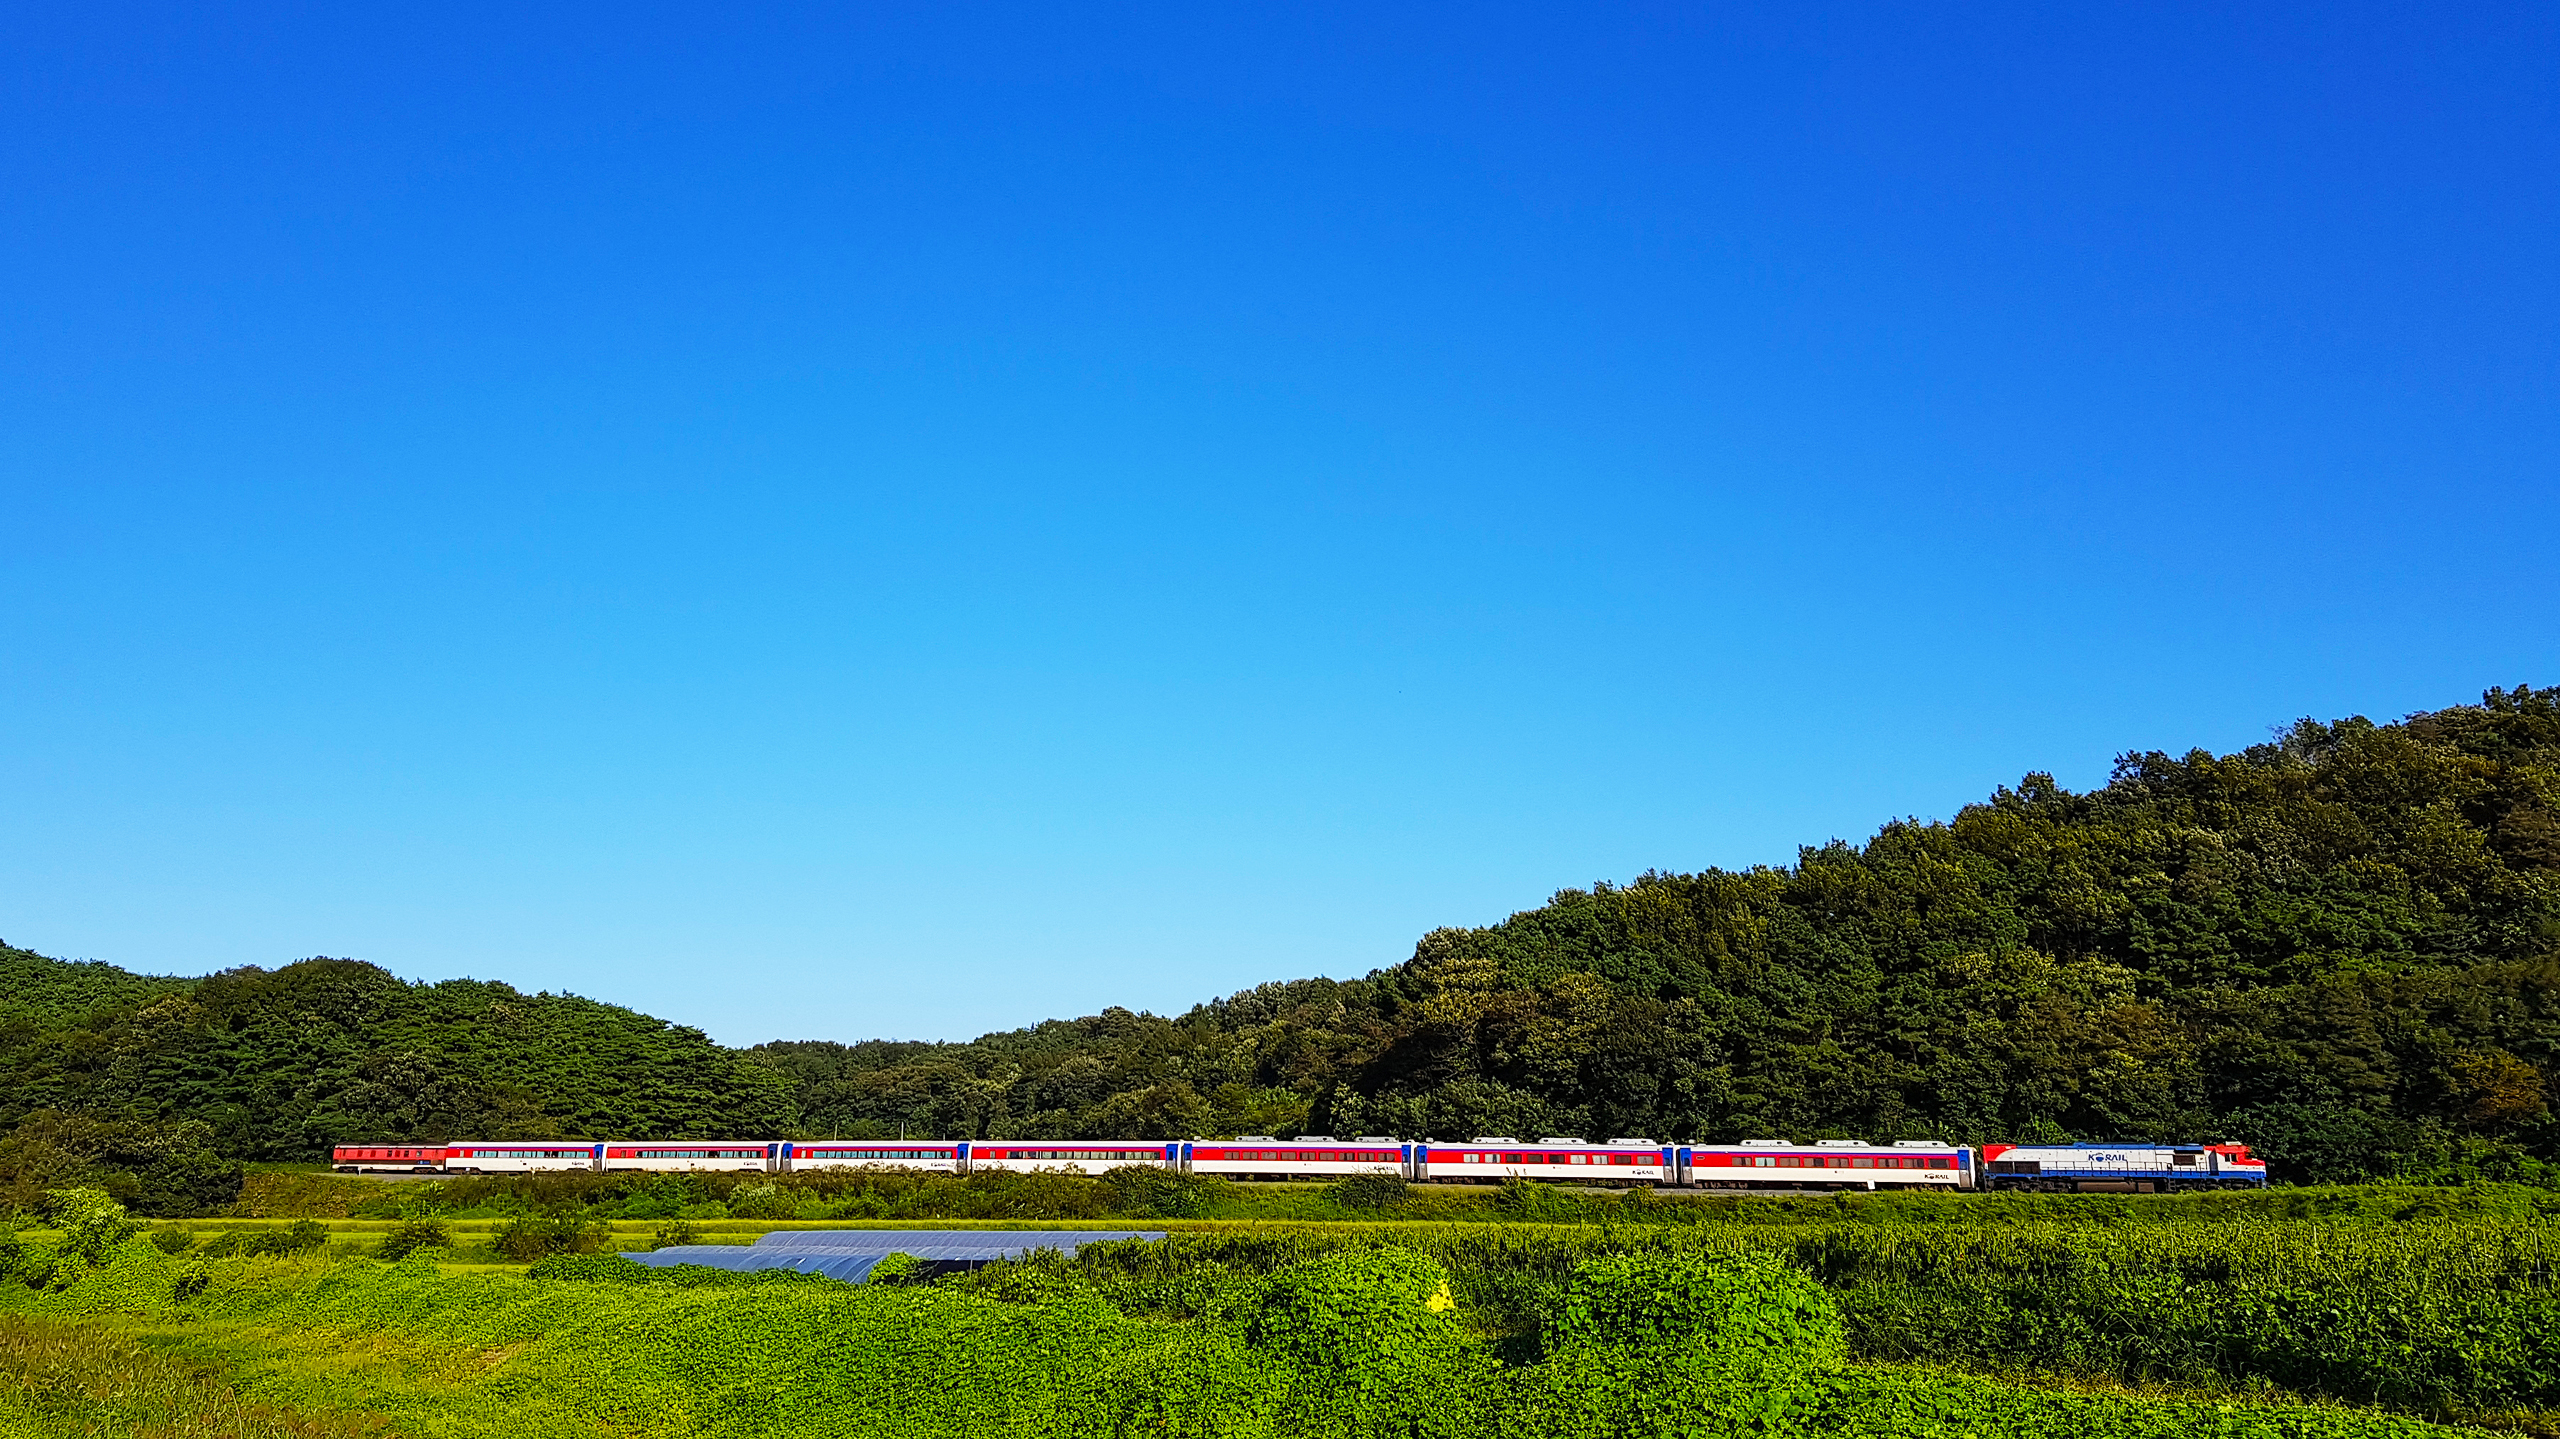 General 2560x1439 train South Korea farm landscape